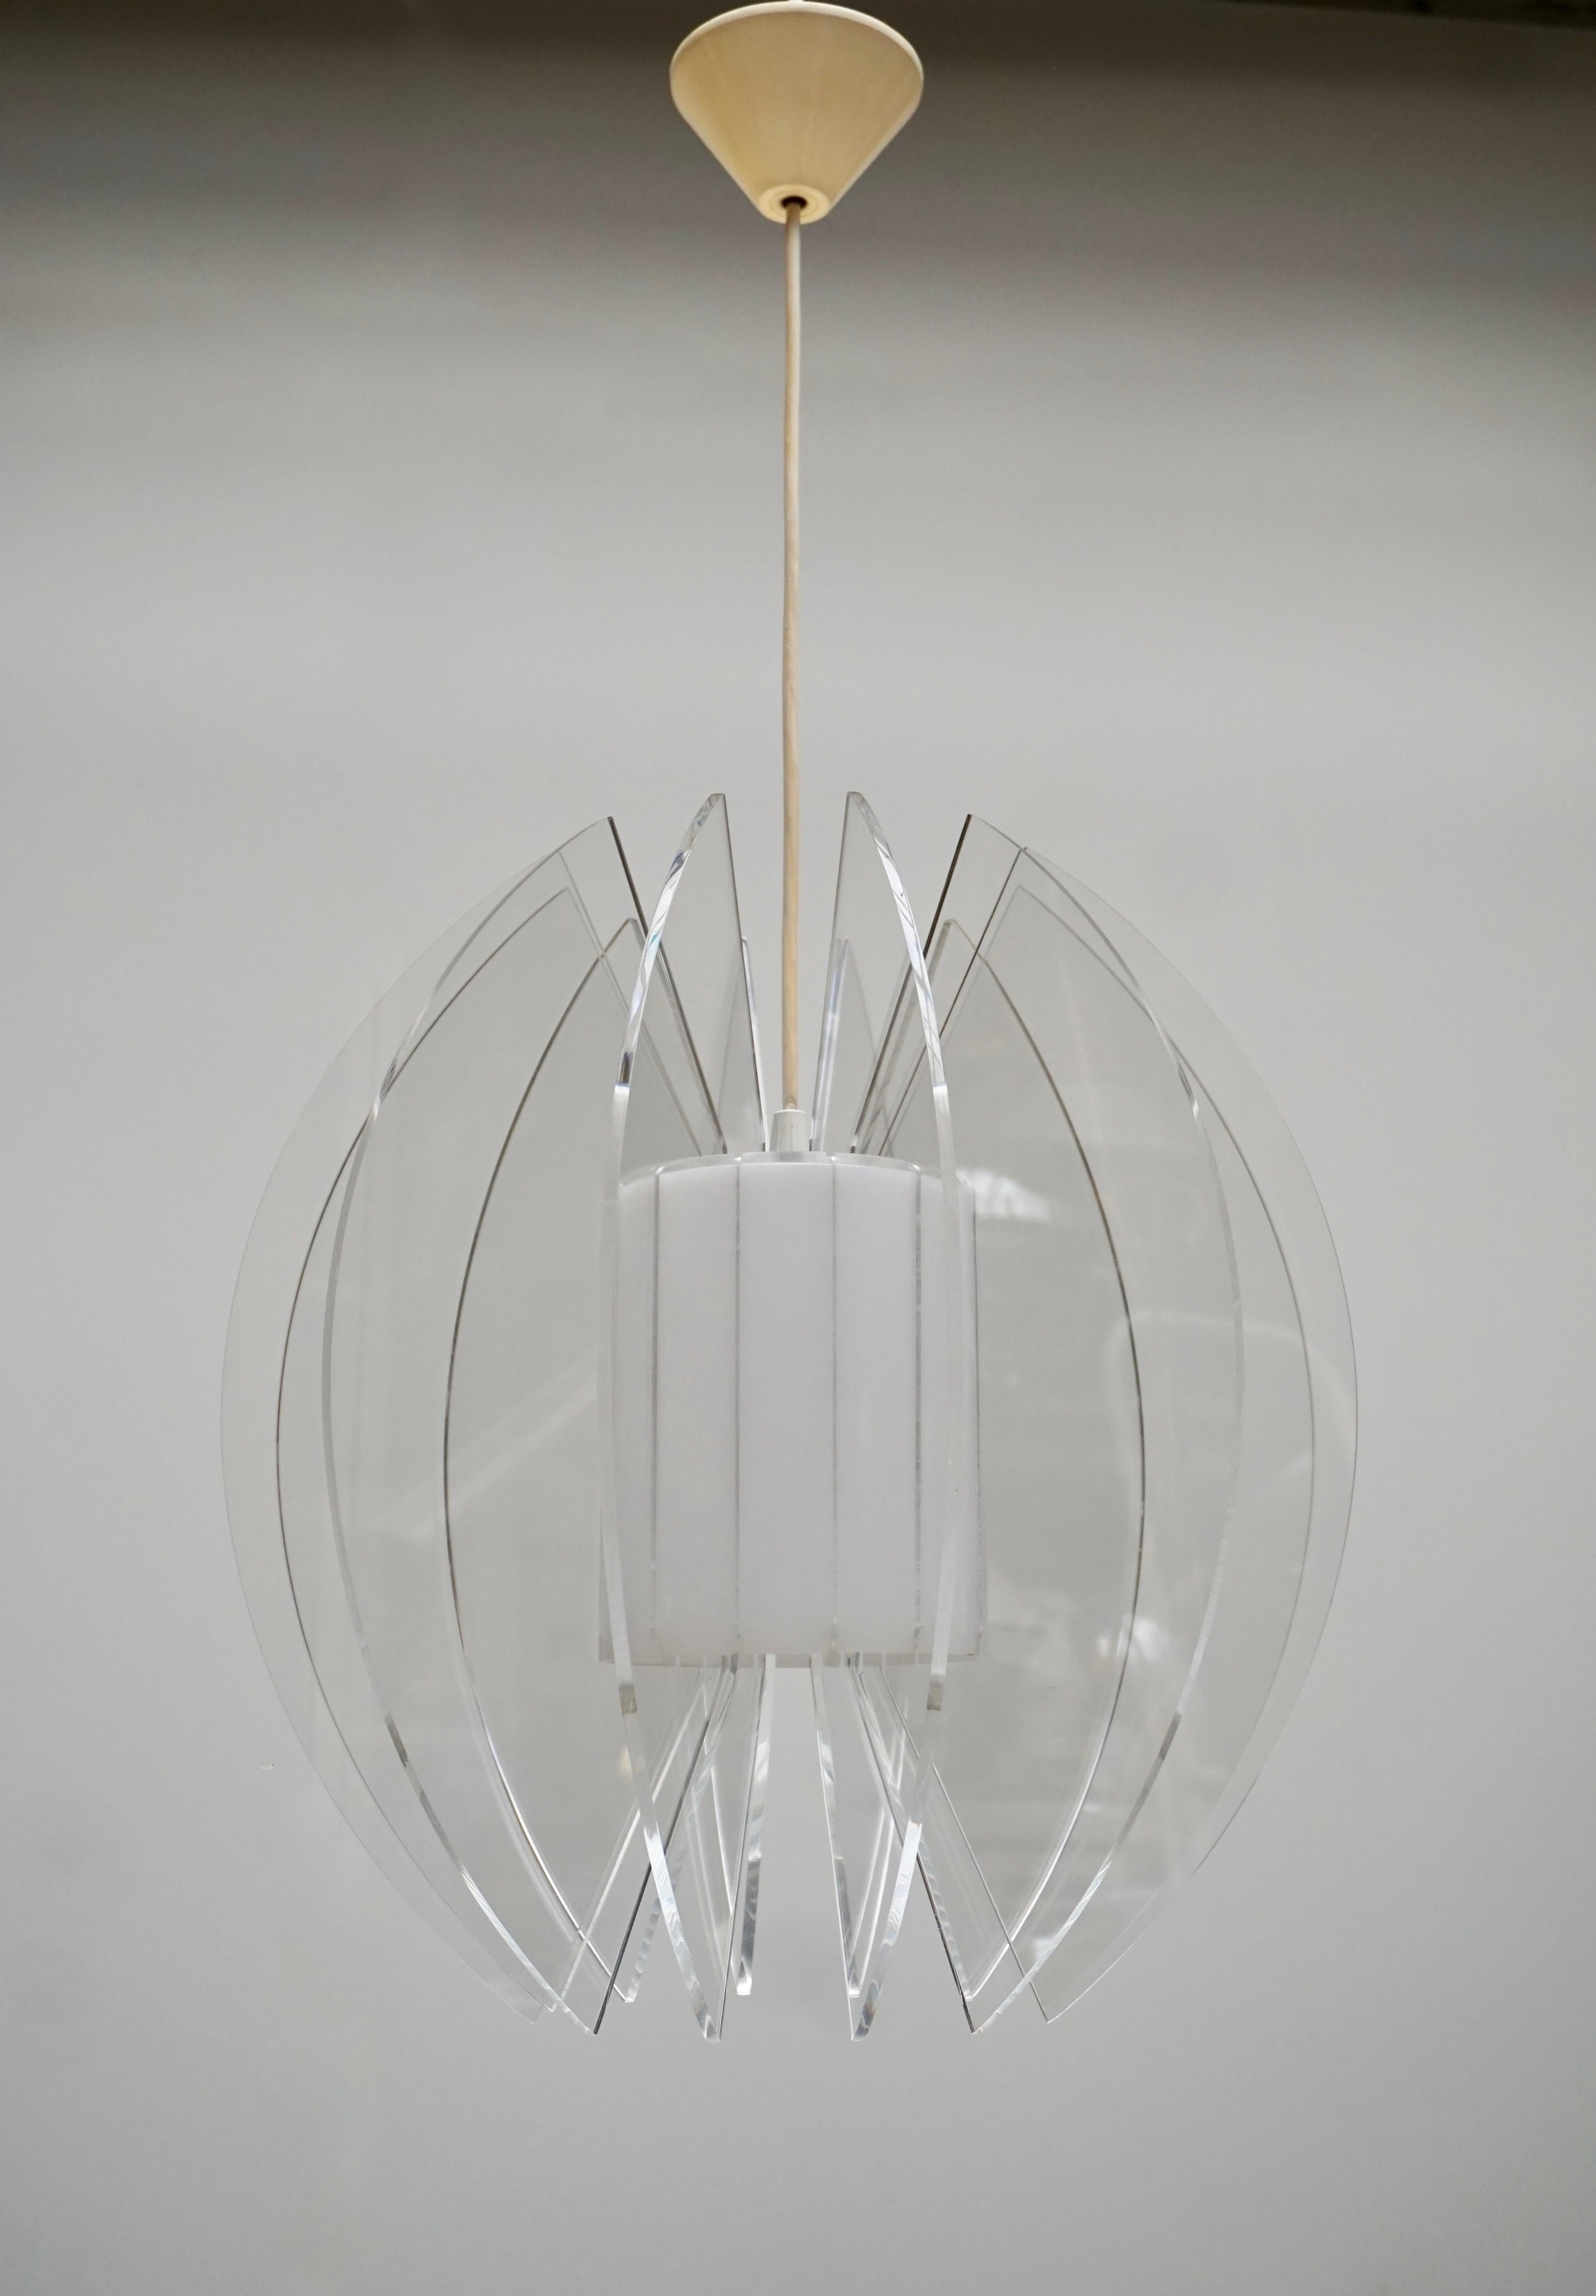 Beautiful pendant light in plexiglass.
Measures: Diameter 40 cm.
Height fixture 45 cm.
Total height 120 cm.
One E27 bulb.